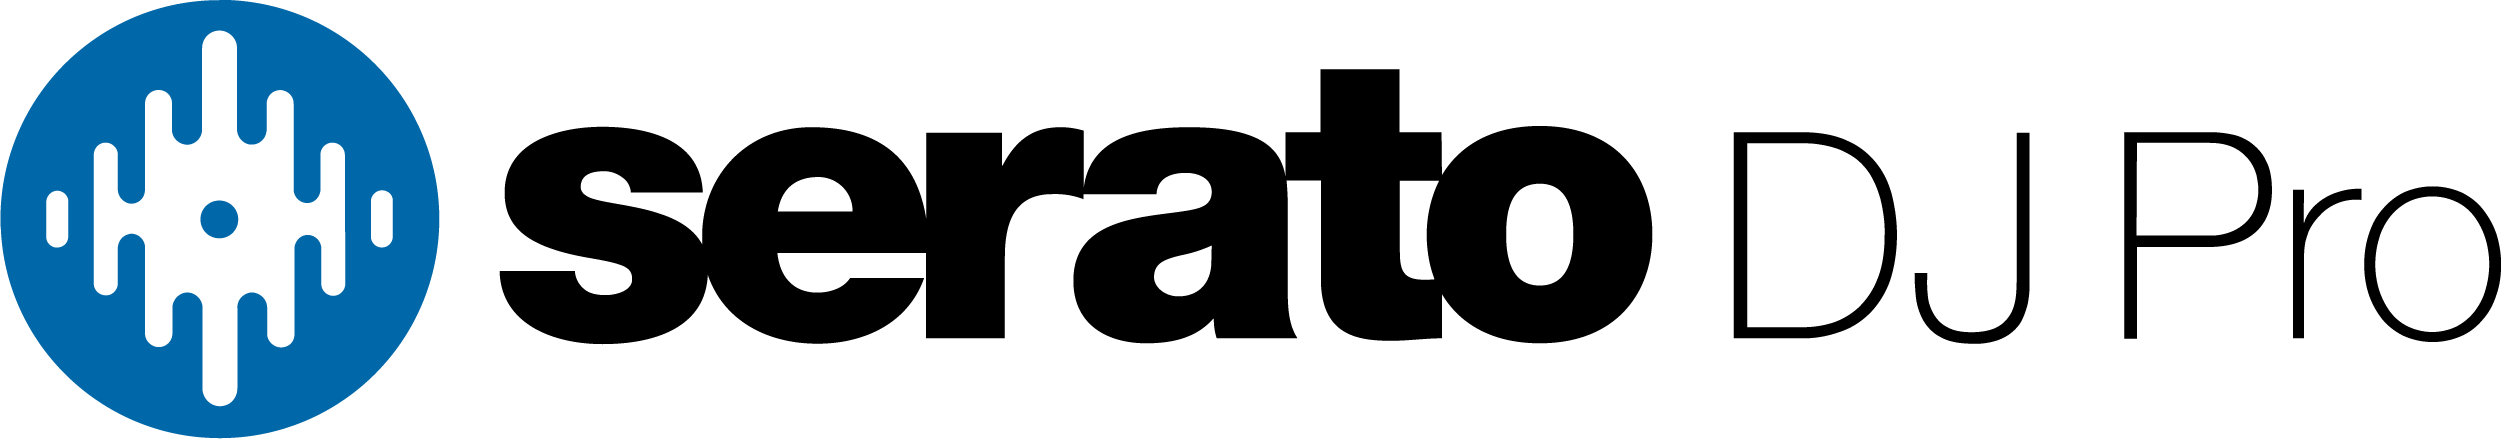 serato-dj-pro-vector-logo